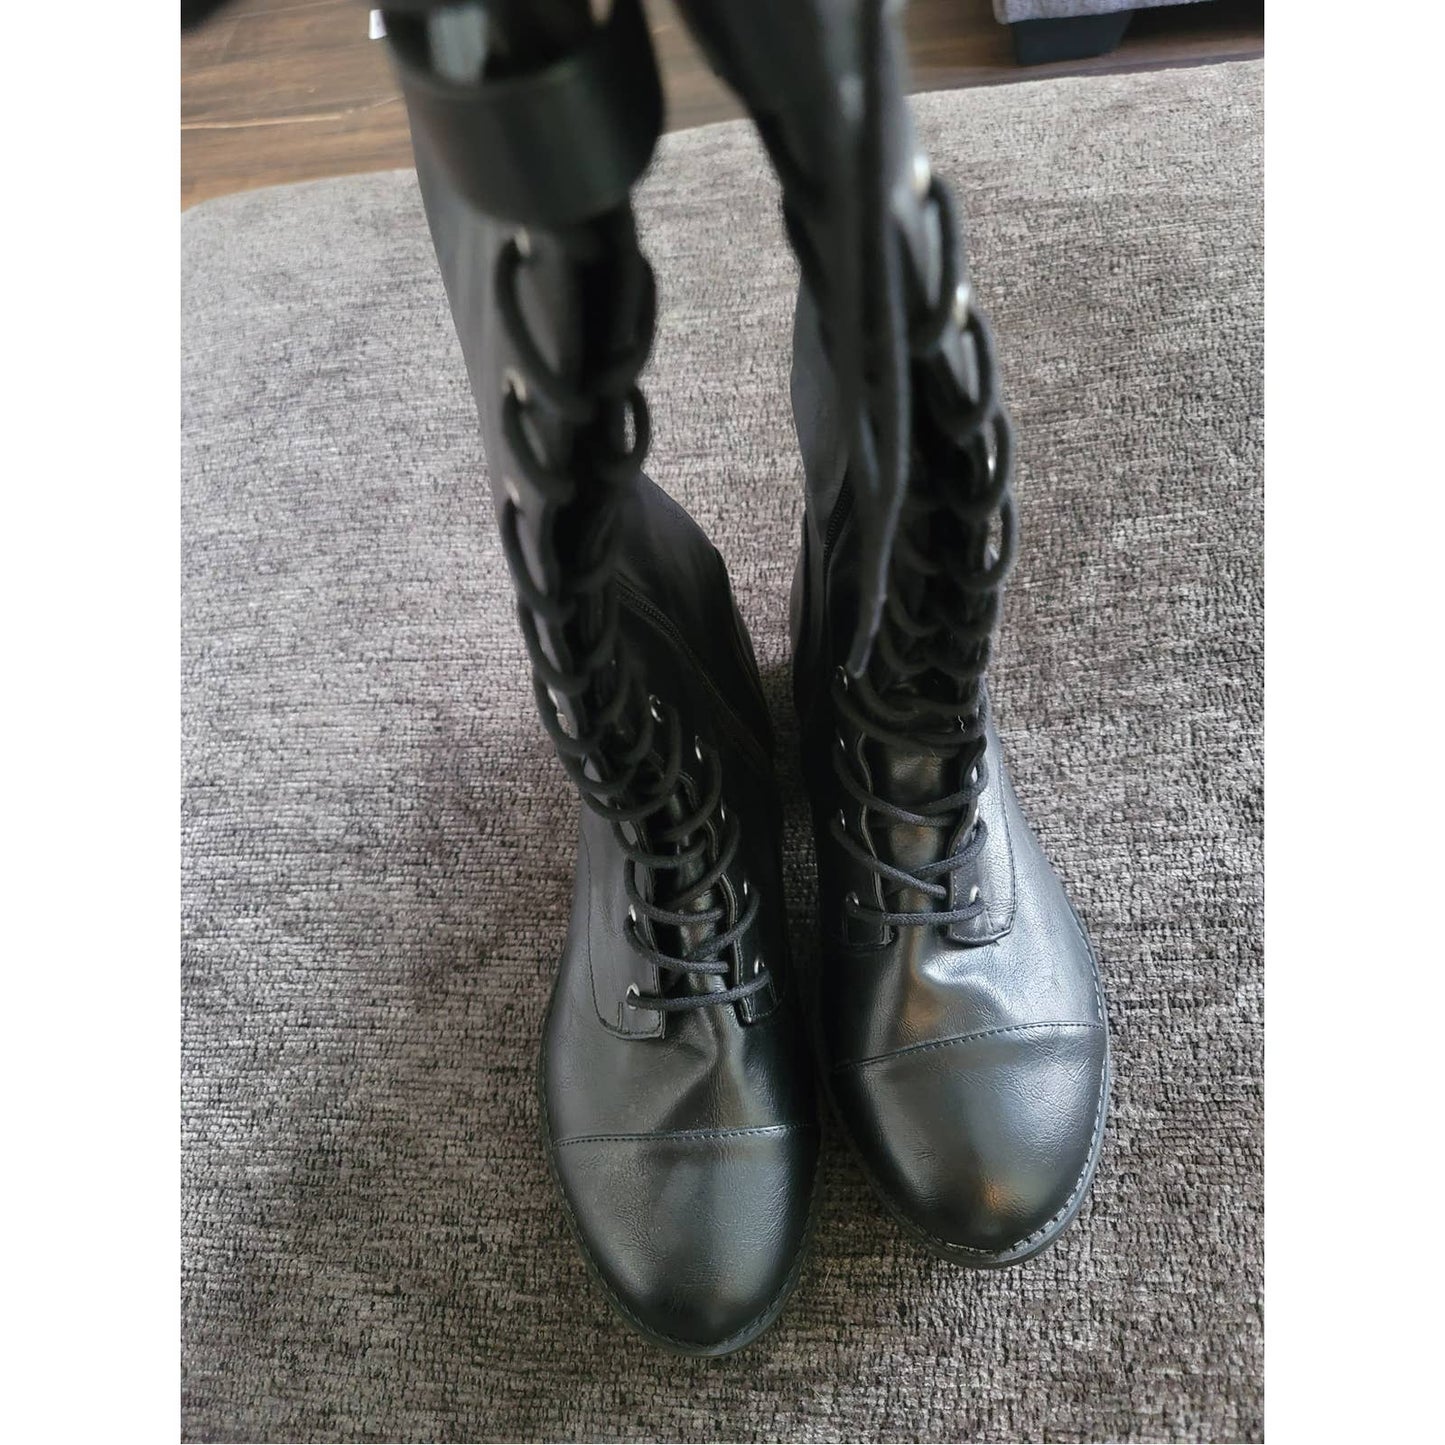 Torrid Black Extra Tall Combat Winter Boots Zipper & Lace Up Closure Womens Size 9W